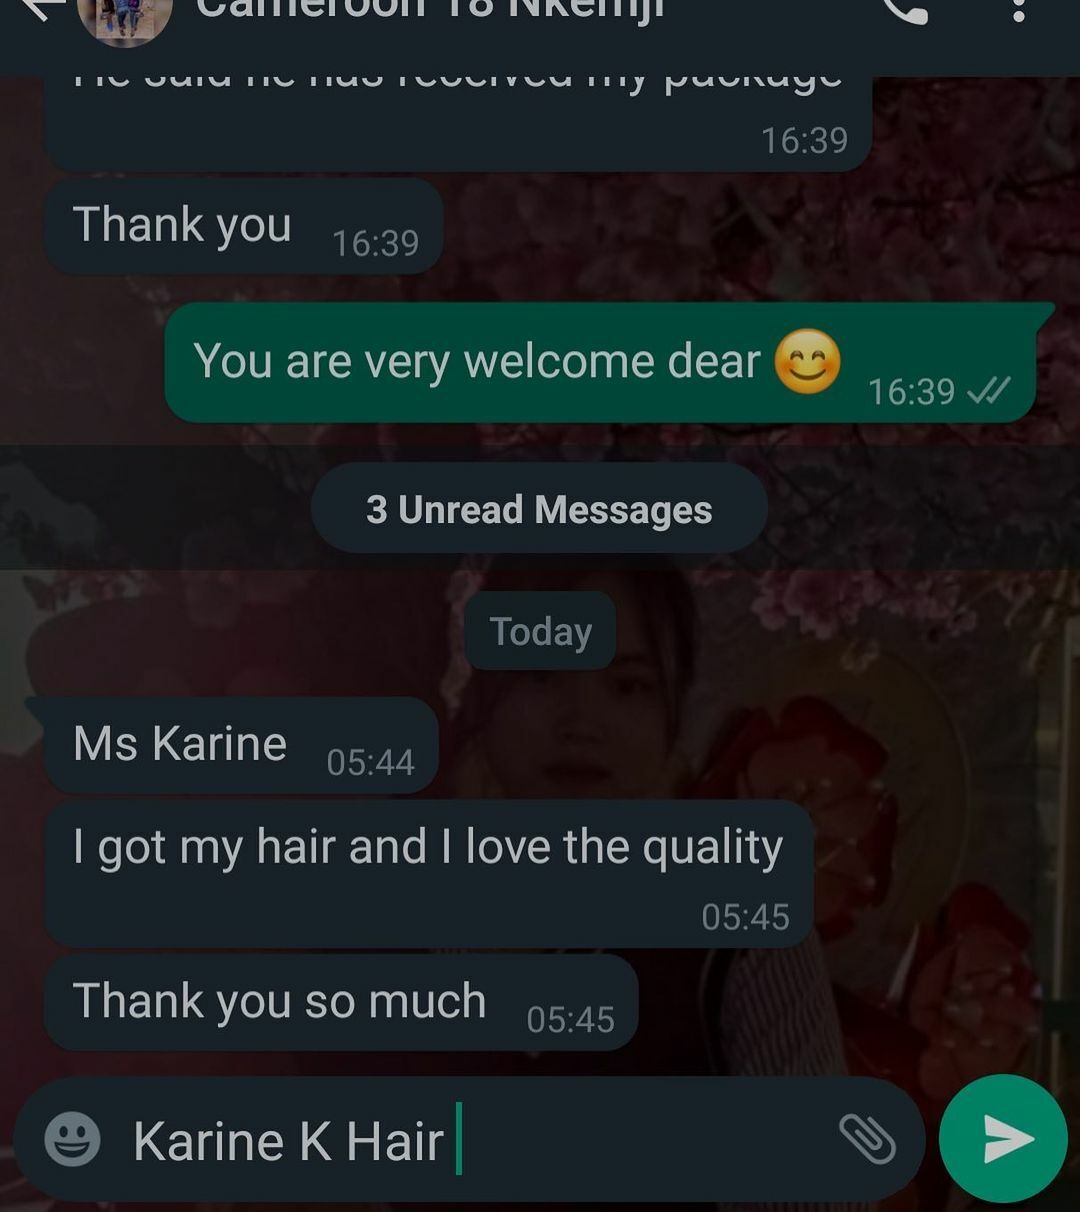 K-Hair's product quality customer feedback